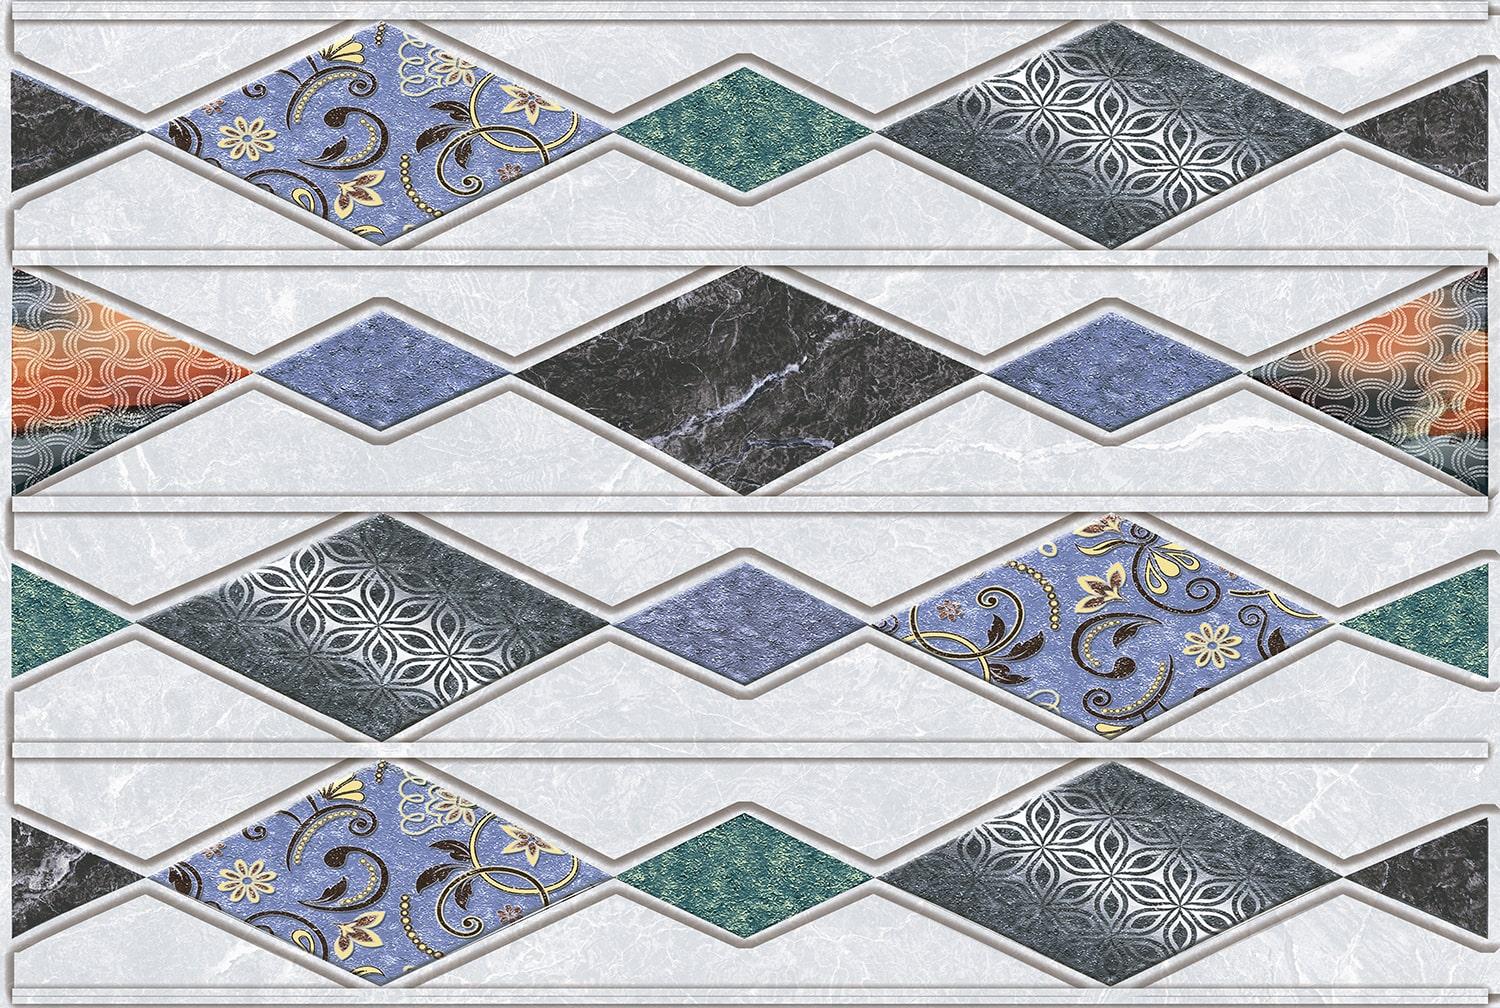 Black Tiles for Bathroom Tiles, Kitchen Tiles, Accent Tiles